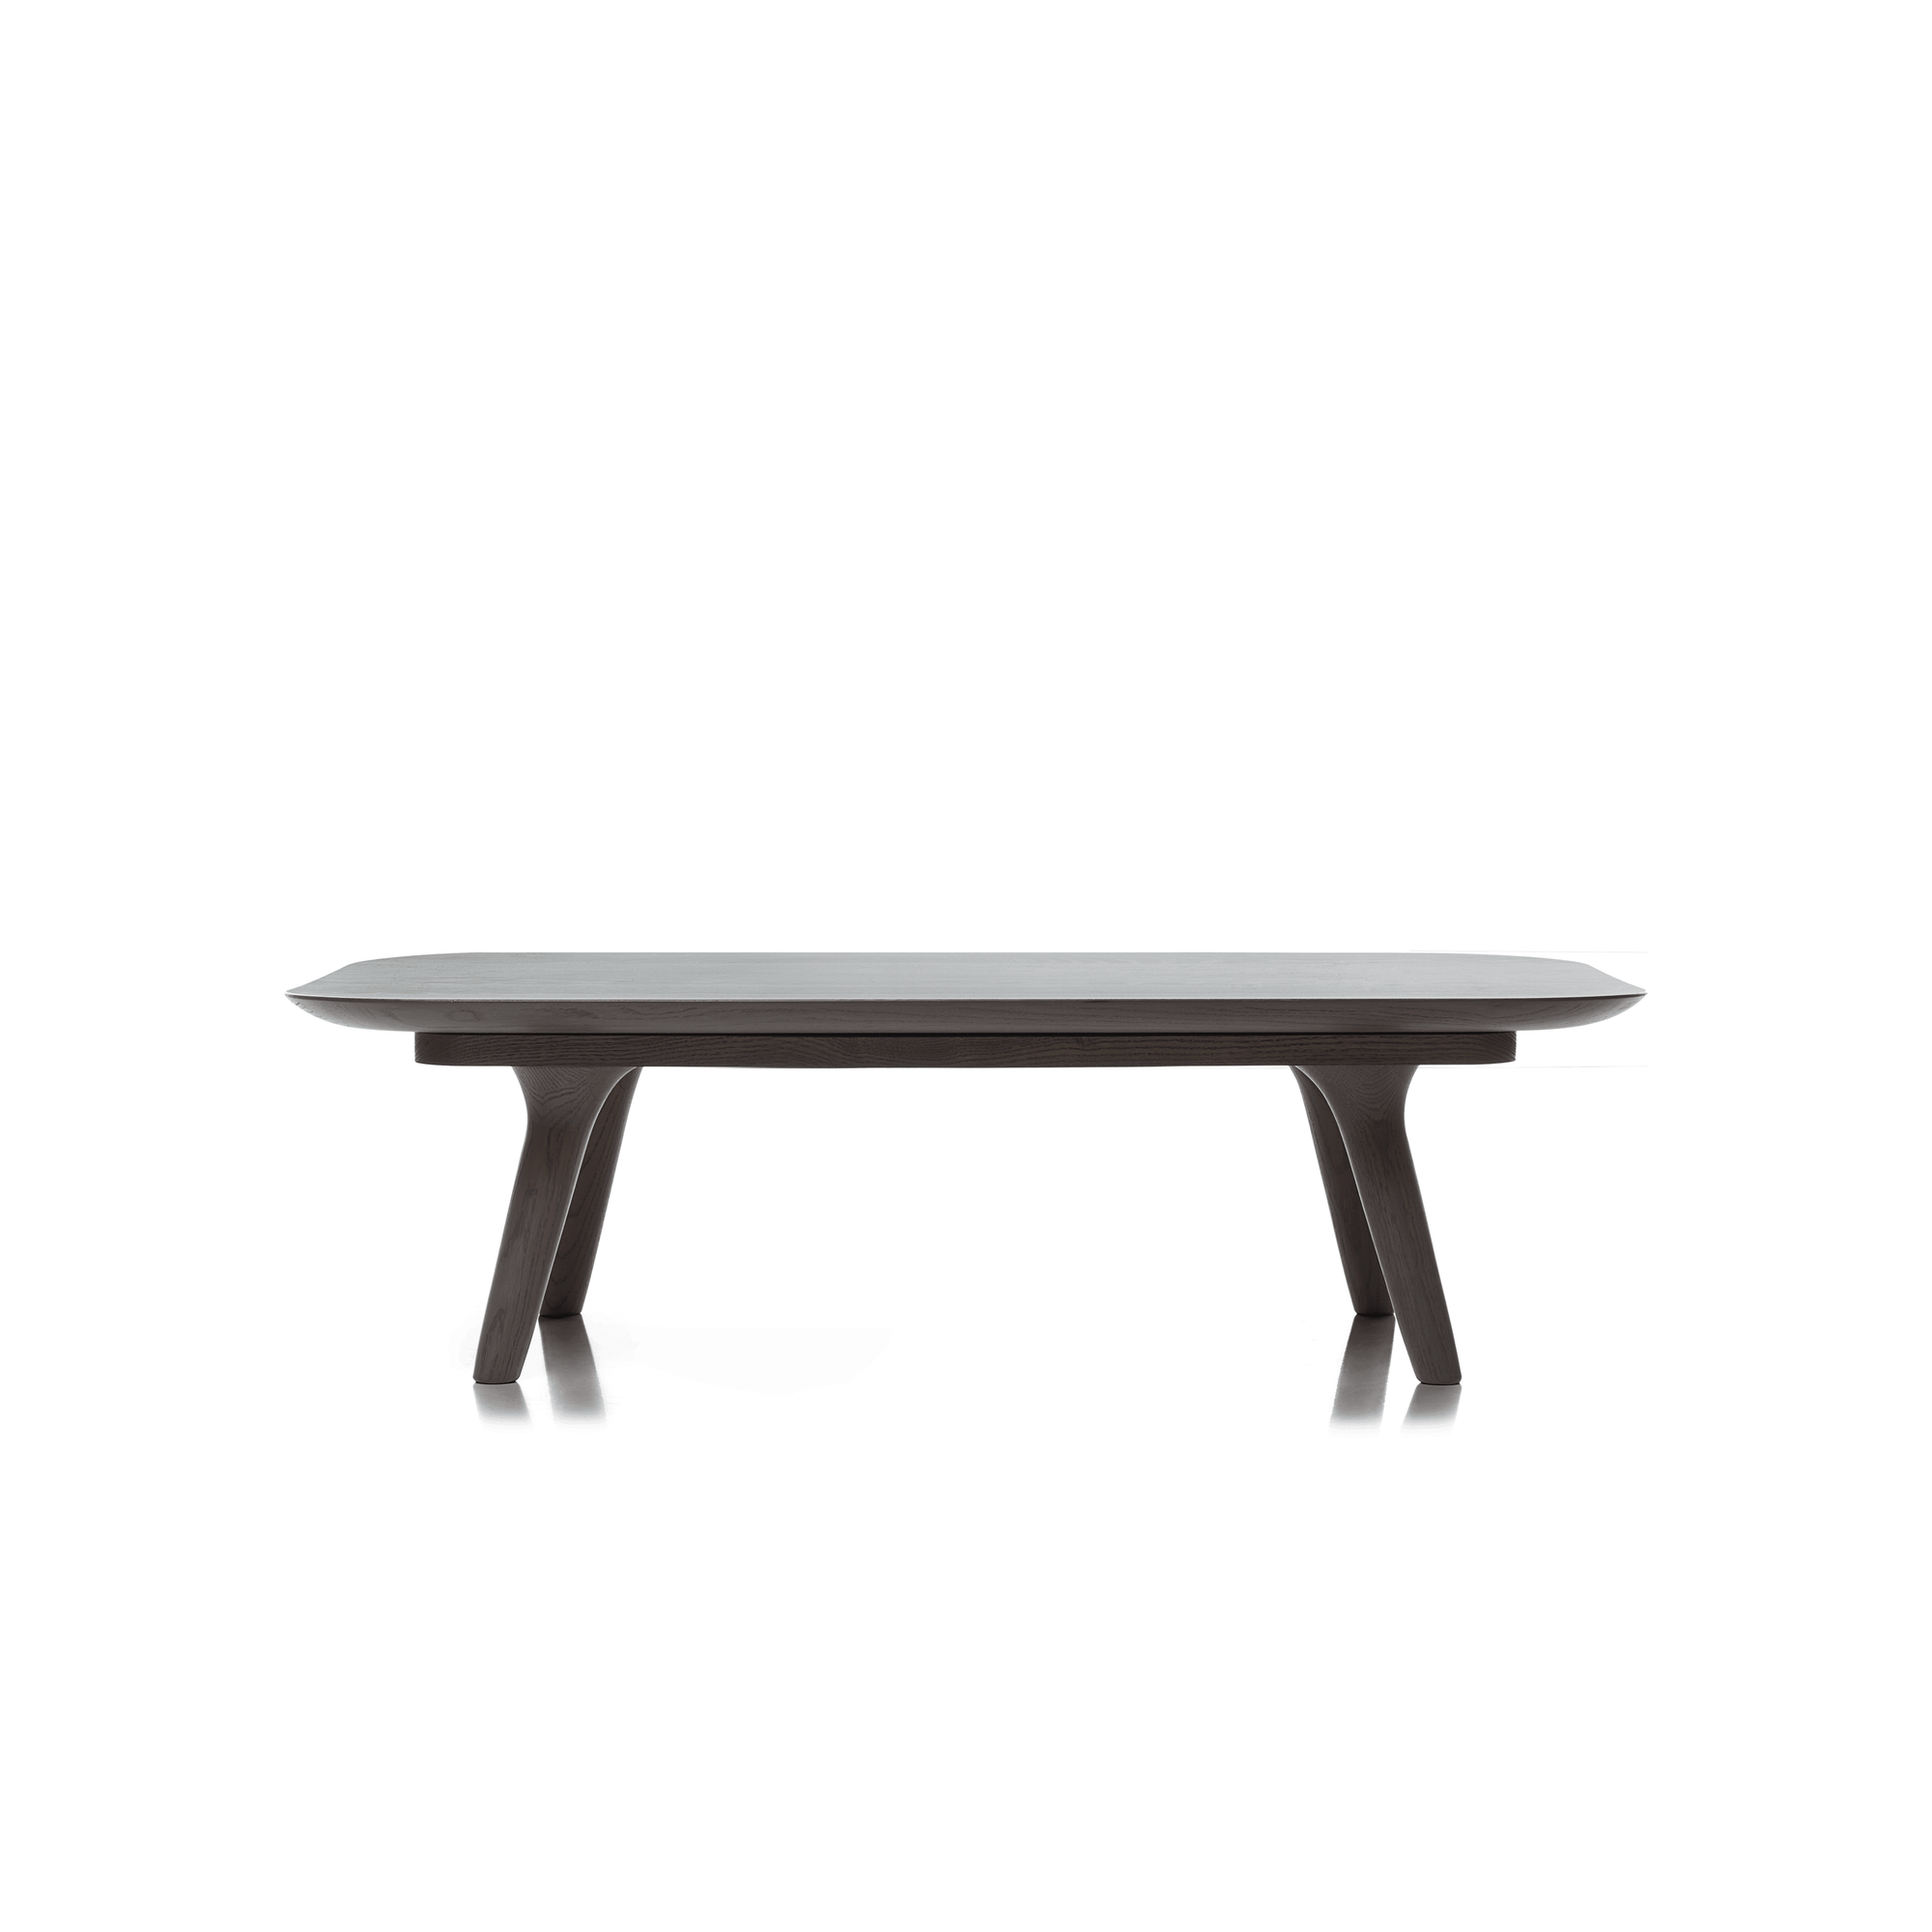 Zio Coffee Table - Curated Furniture $2000+, Black, brown, coffee table, gray, Moooi, White